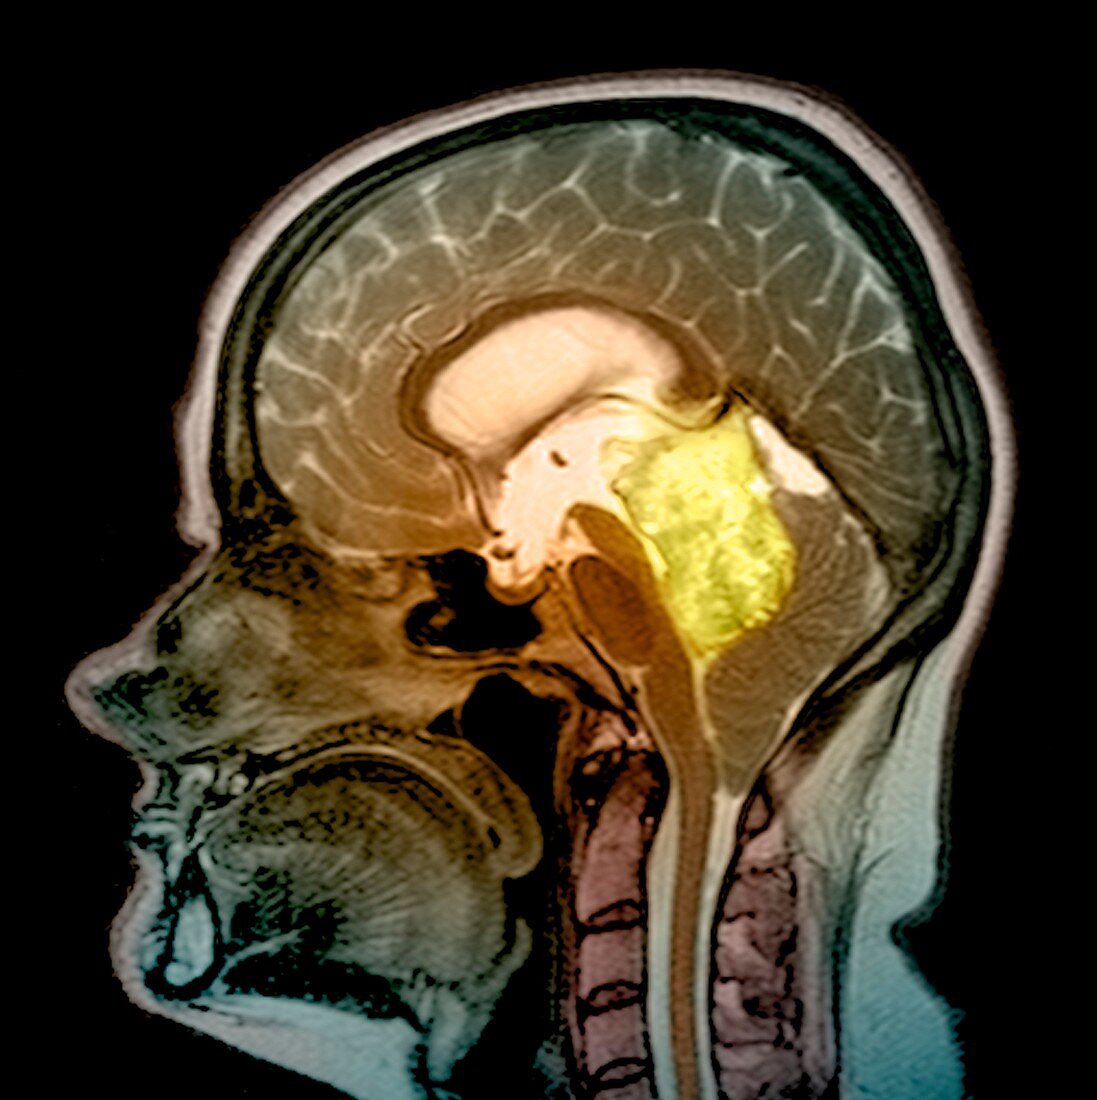 Pineal gland tumour,MRI scan